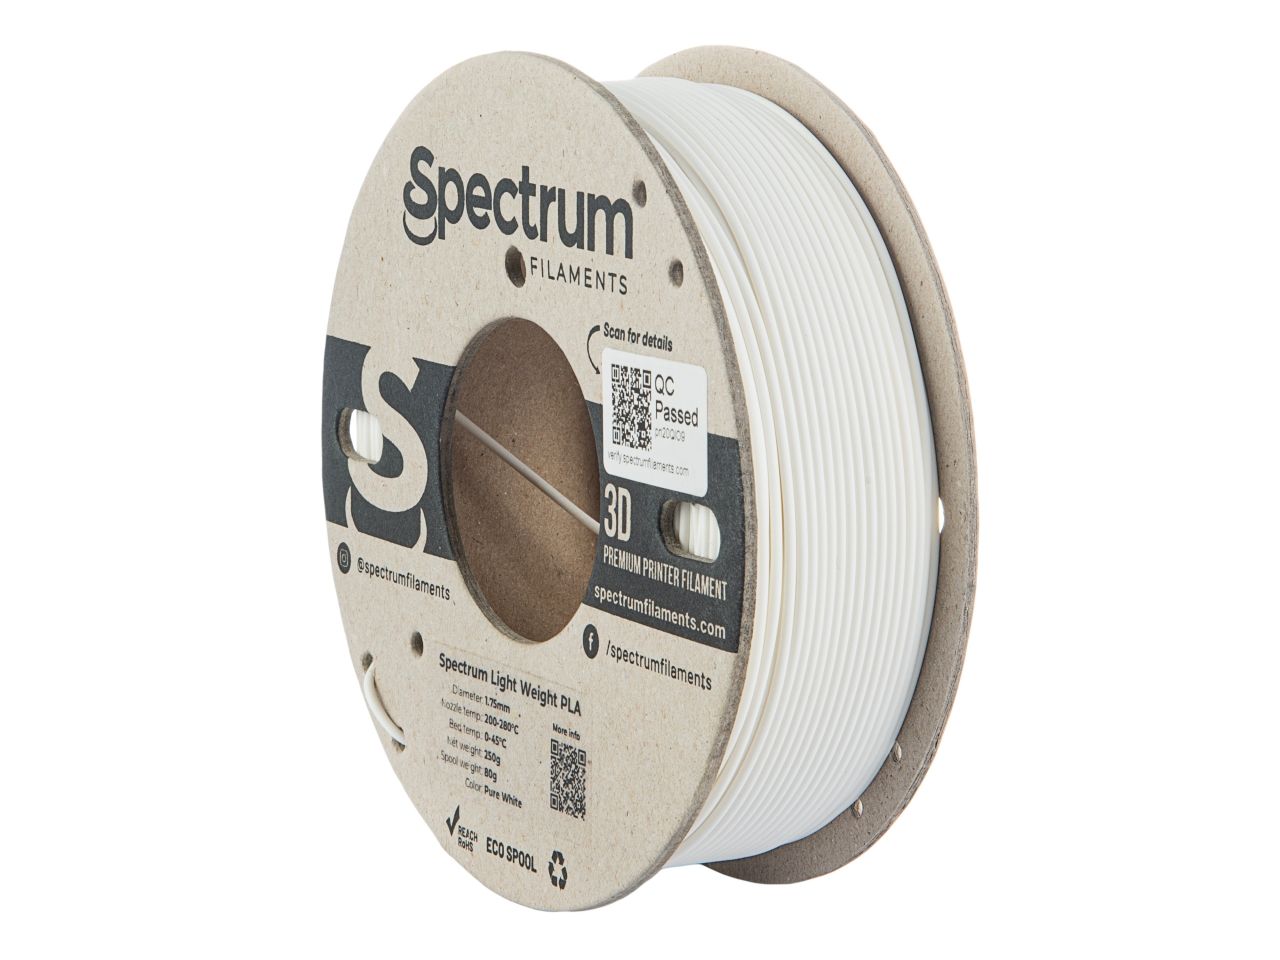 Spectrum Light Weight PLA 1.75mm, Pure White, 80999, 0.25kg